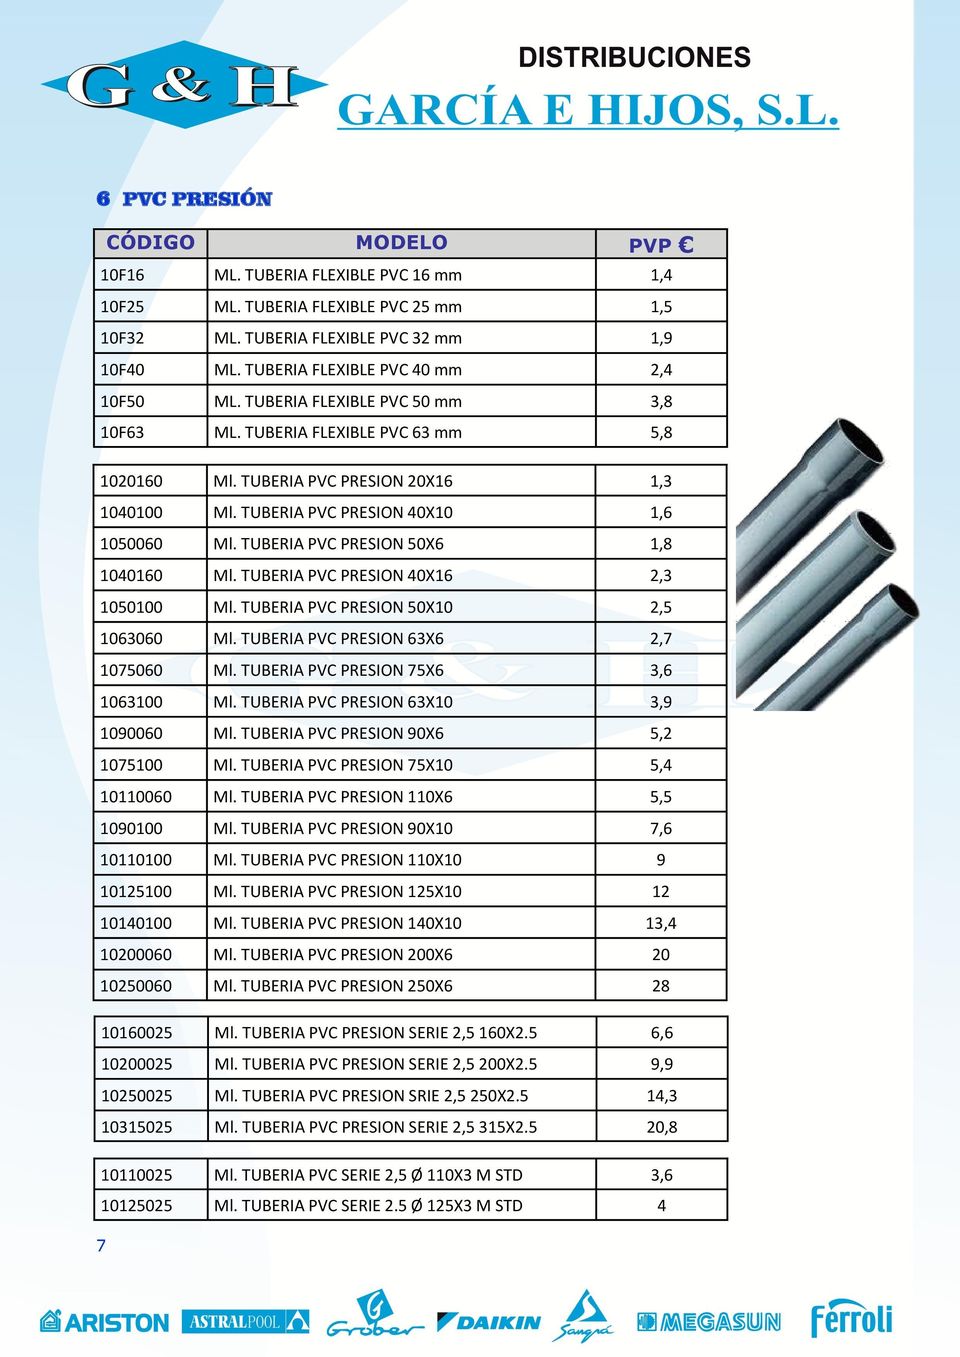 TUBERIA PVC PRESION 50X6 1,8 1040160 Ml. TUBERIA PVC PRESION 40X16 2,3 1050100 Ml. TUBERIA PVC PRESION 50X10 2,5 1063060 Ml. TUBERIA PVC PRESION 63X6 2,7 1075060 Ml.